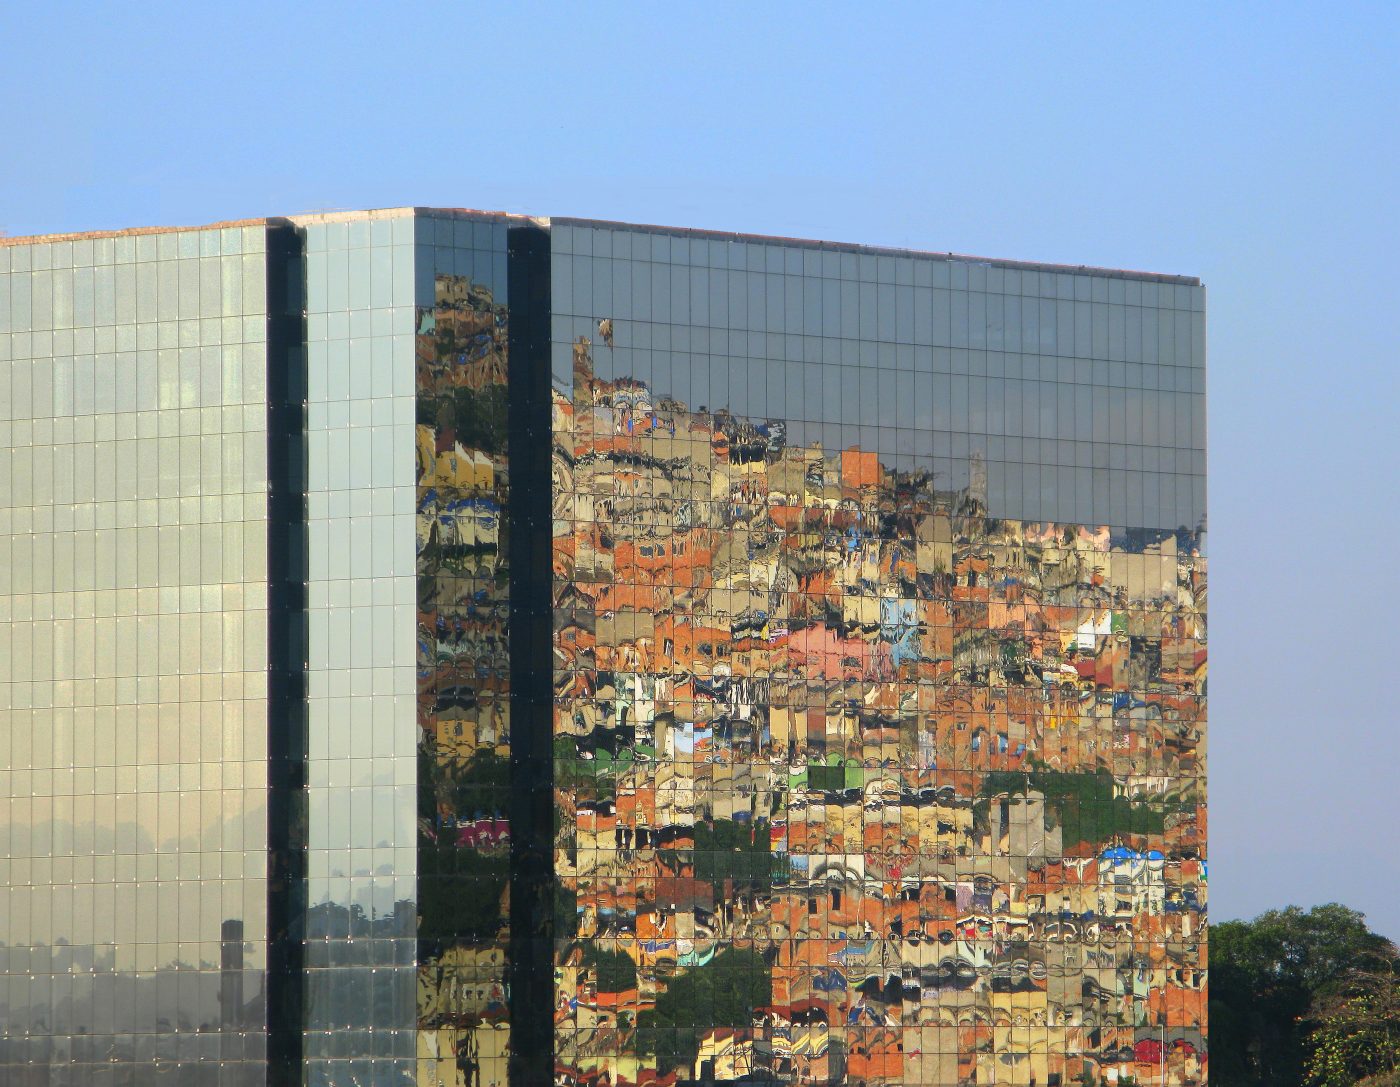 Tale of Two Cities-Rio de Janeiro